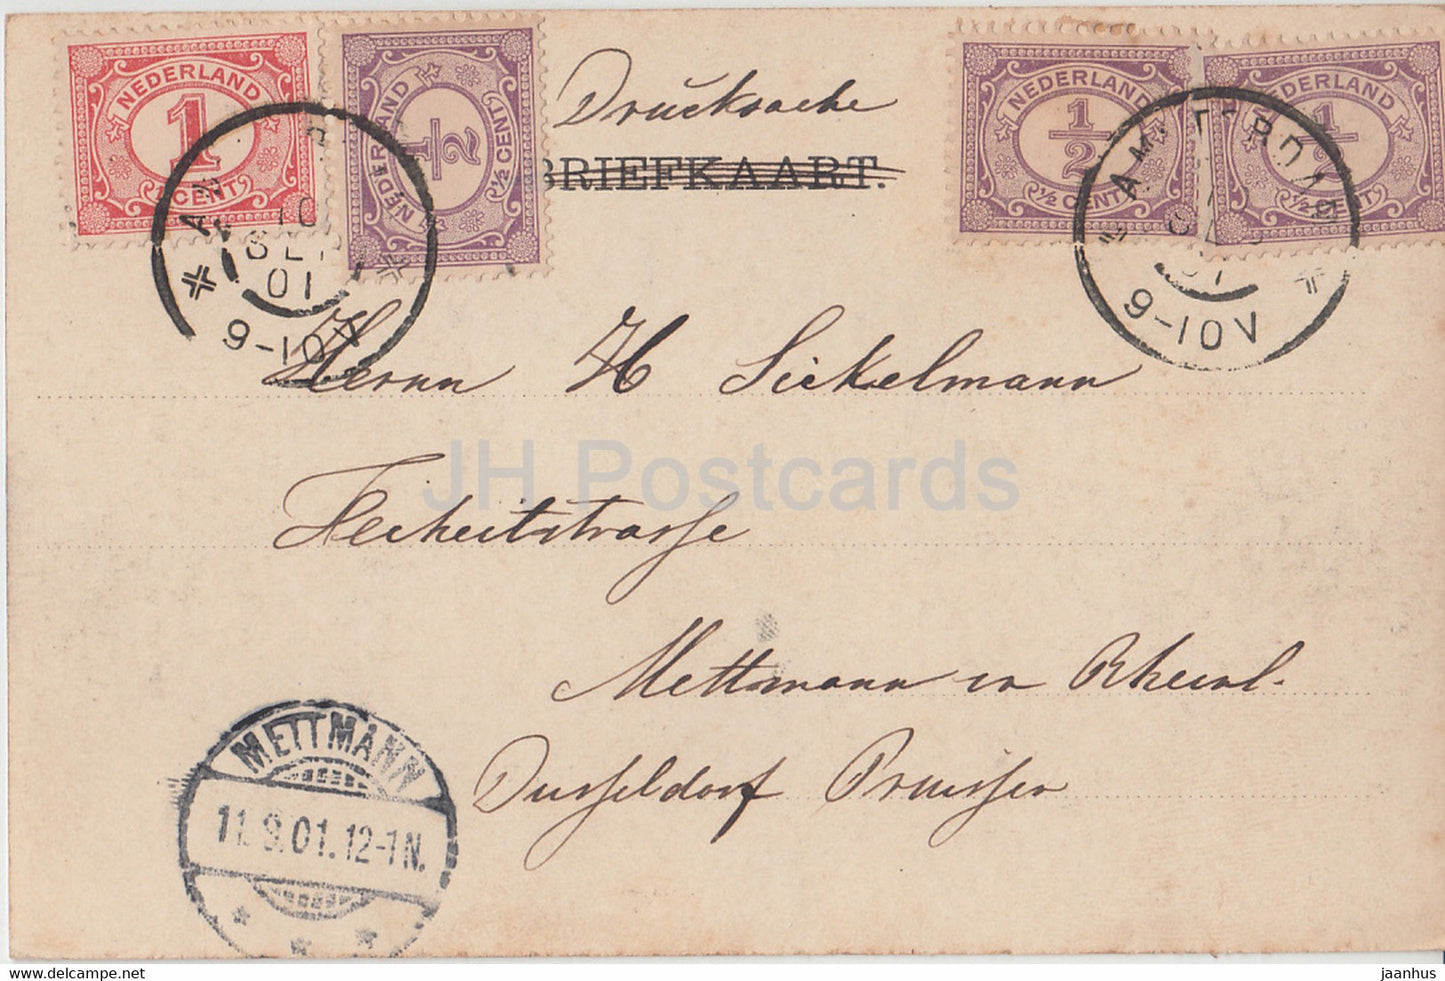 Amsterdam - Het Y met de West Indische Mail - Schiff - alte Postkarte - 1901 - Niederlande - gebraucht